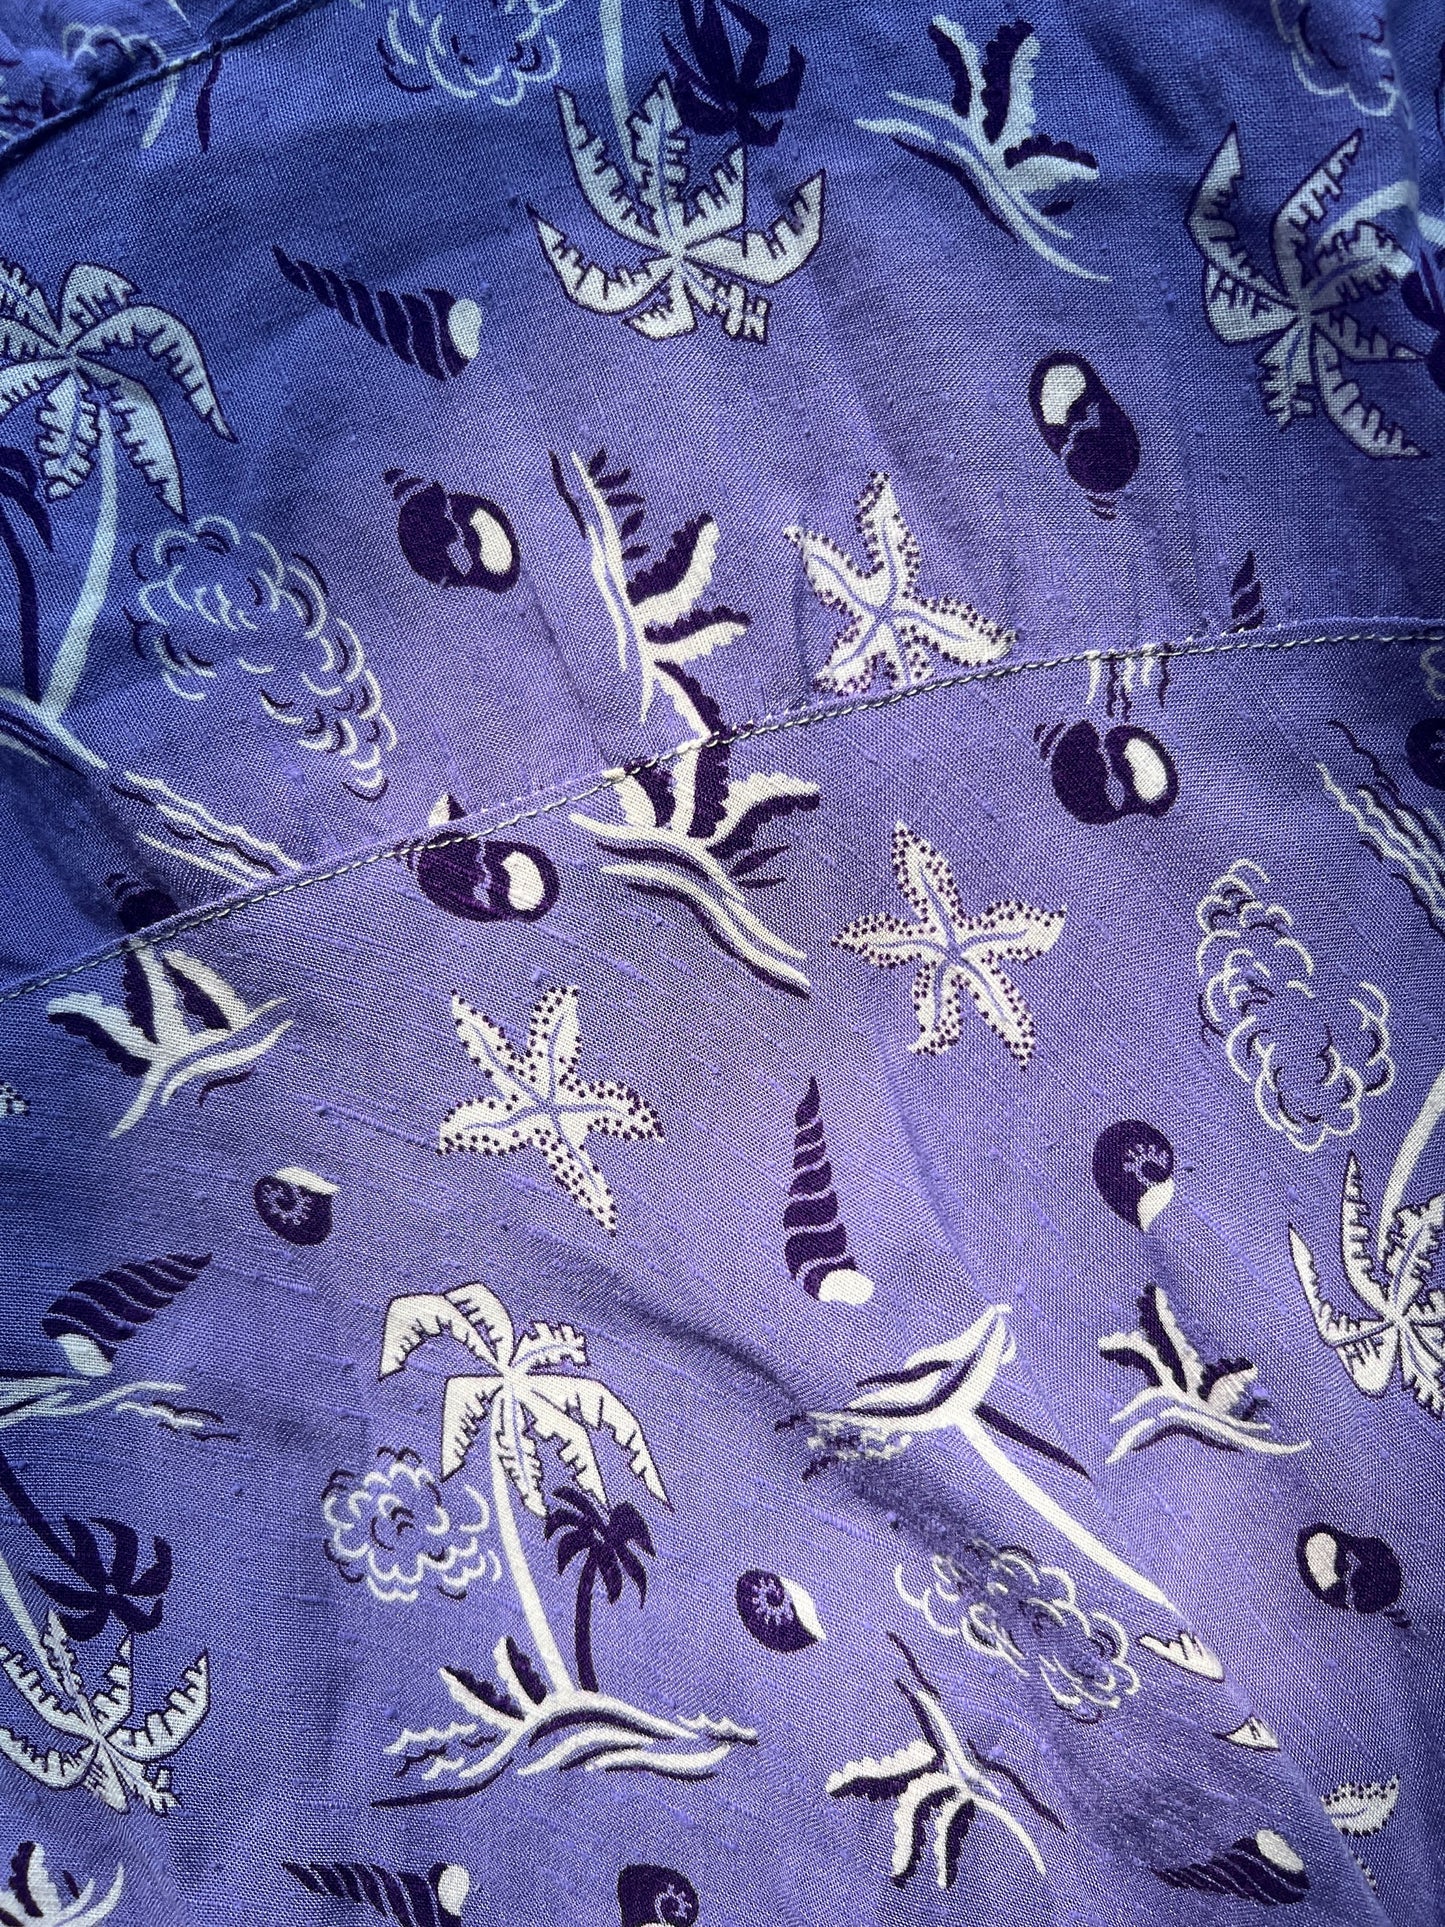 1930s Raw Silk Seashell Novelty Print Dress S/M